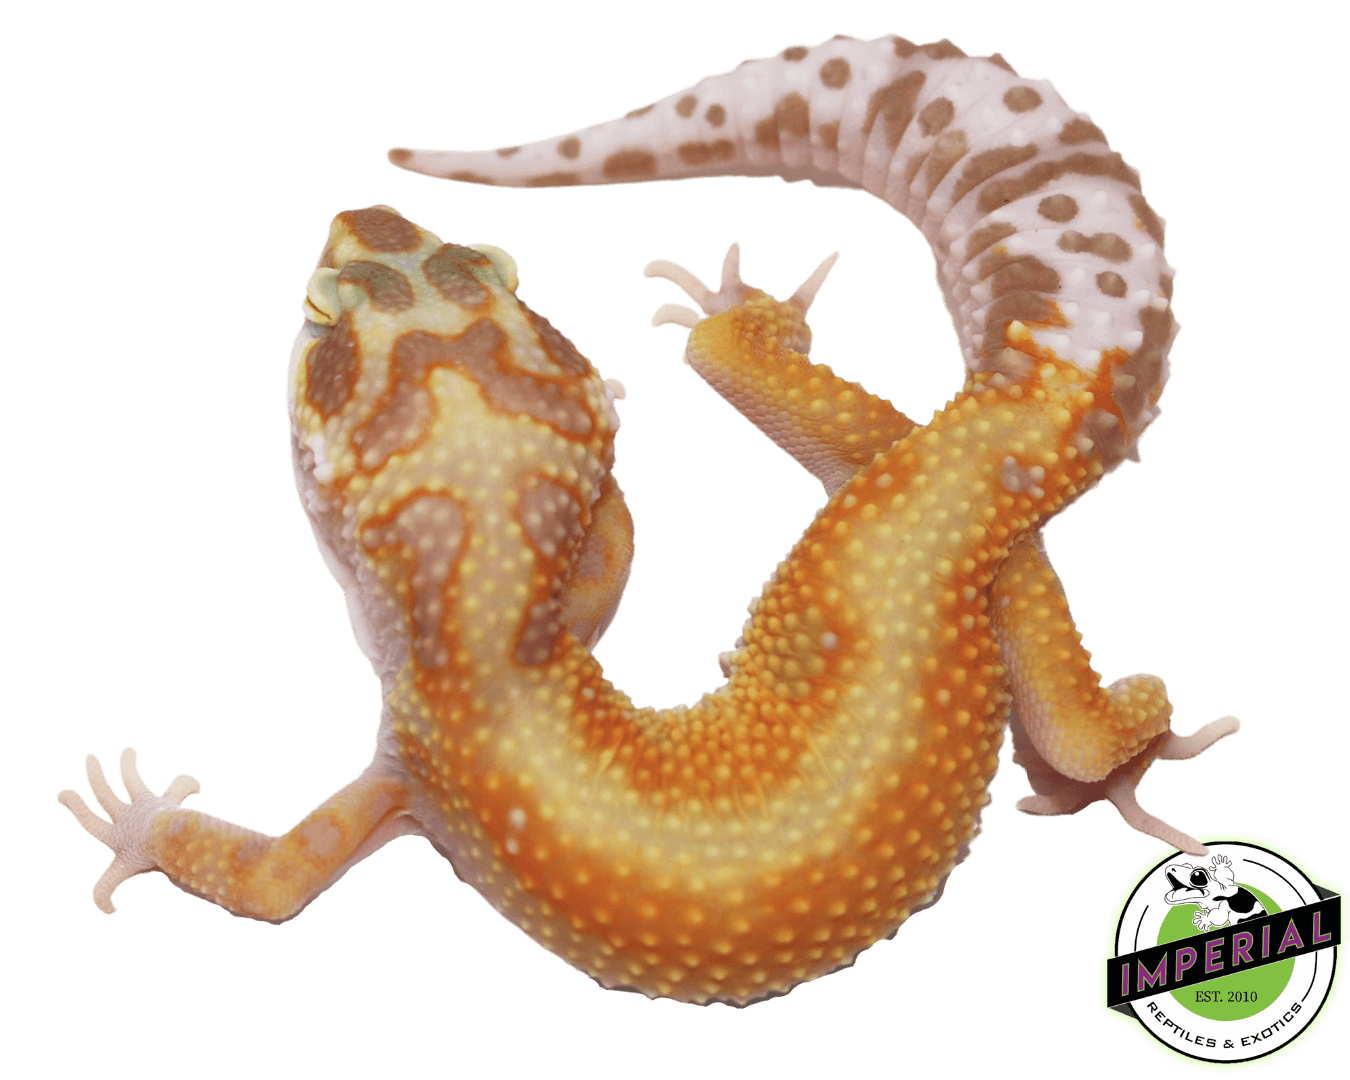 red stripe tremper leopard gecko for sale, buy reptiles online